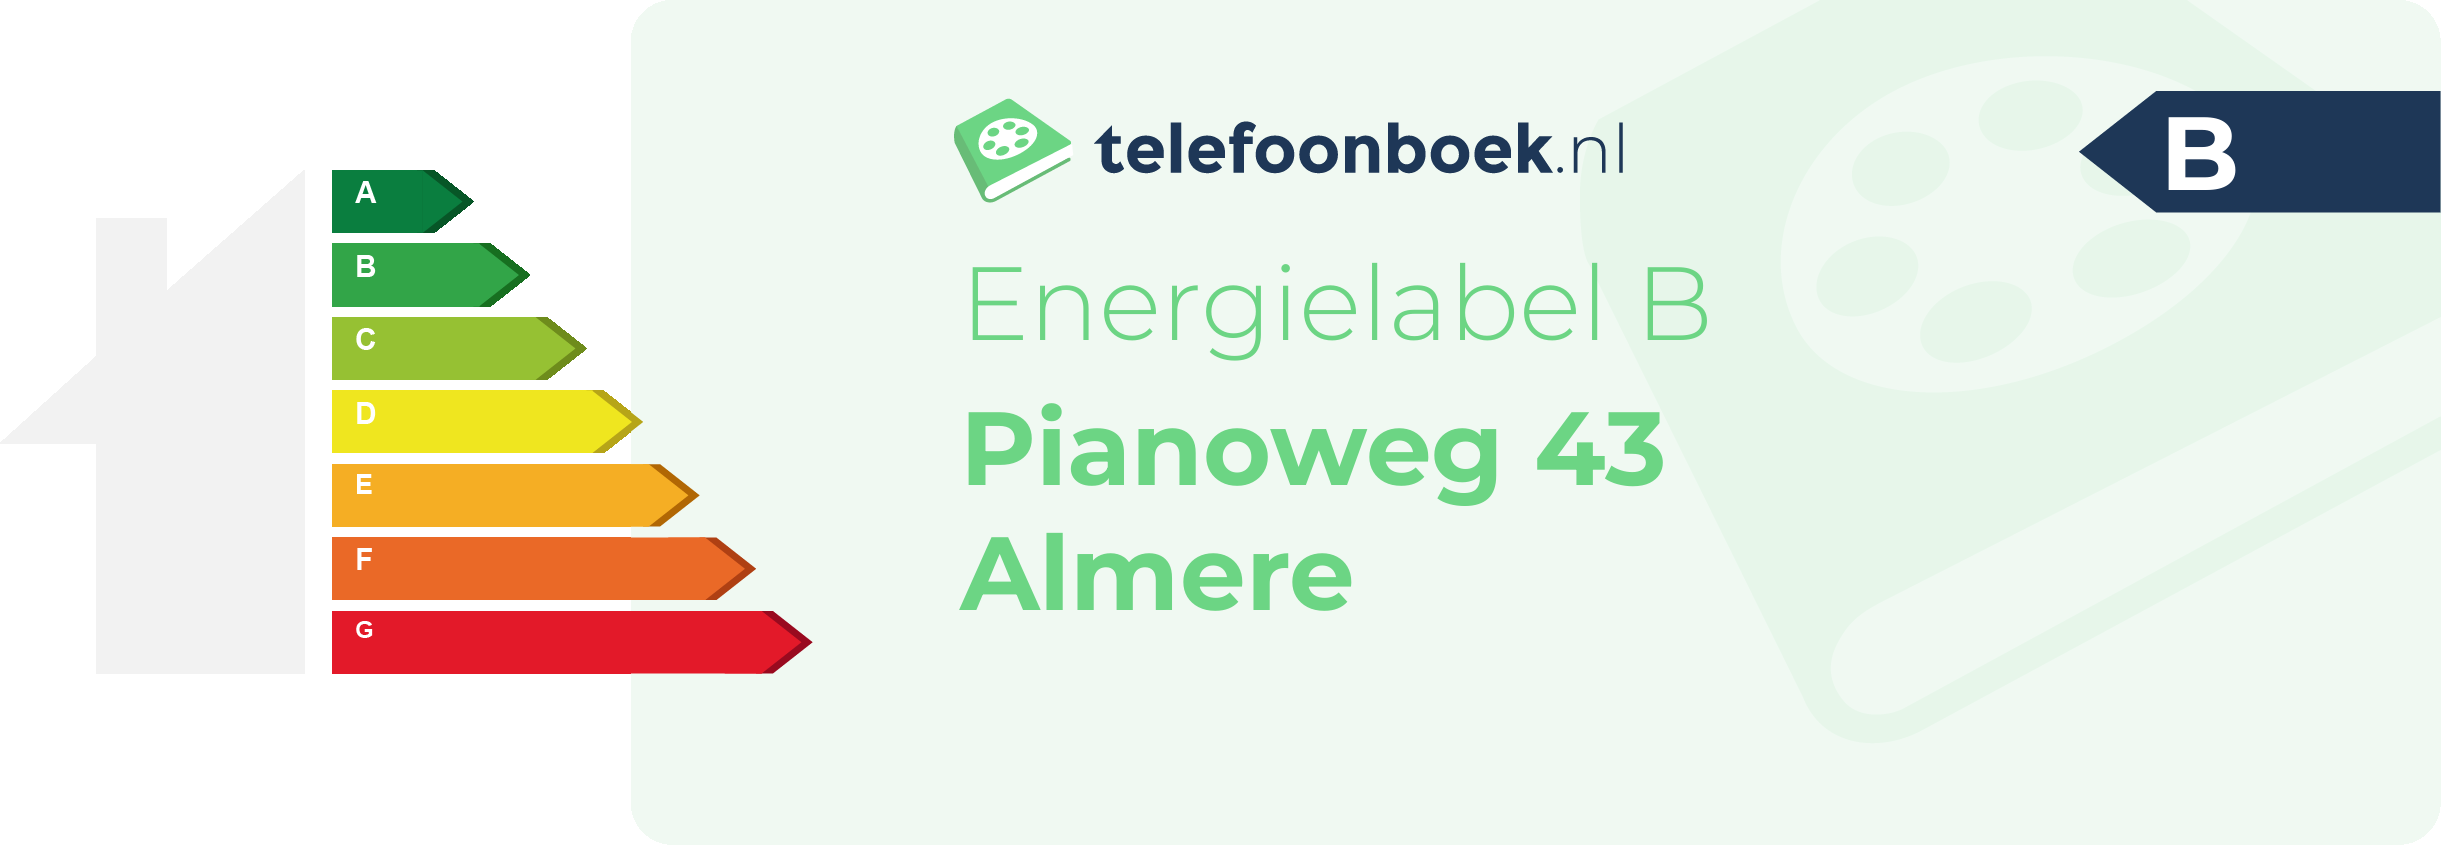 Energielabel Pianoweg 43 Almere